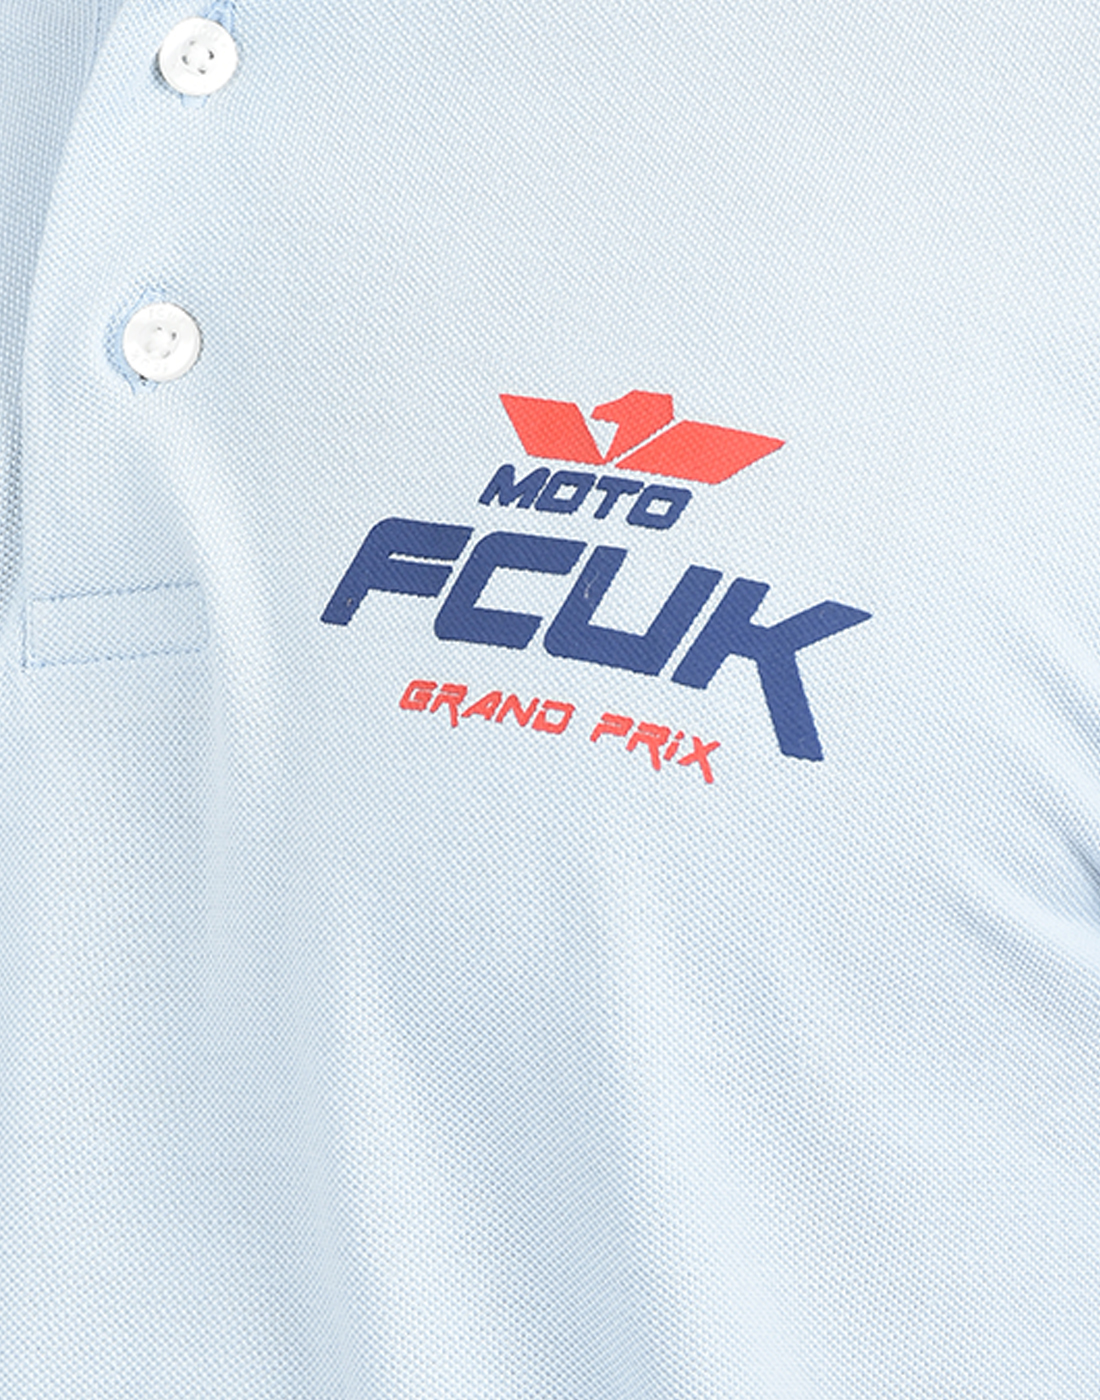 FCUK Men Blue Polo T-Shirt